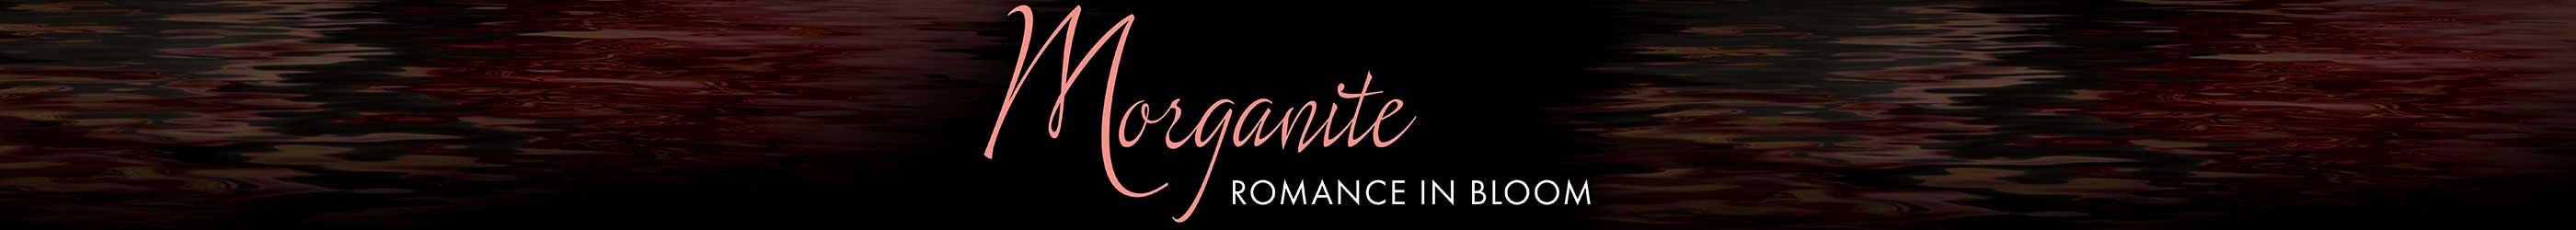 Morganite Romance